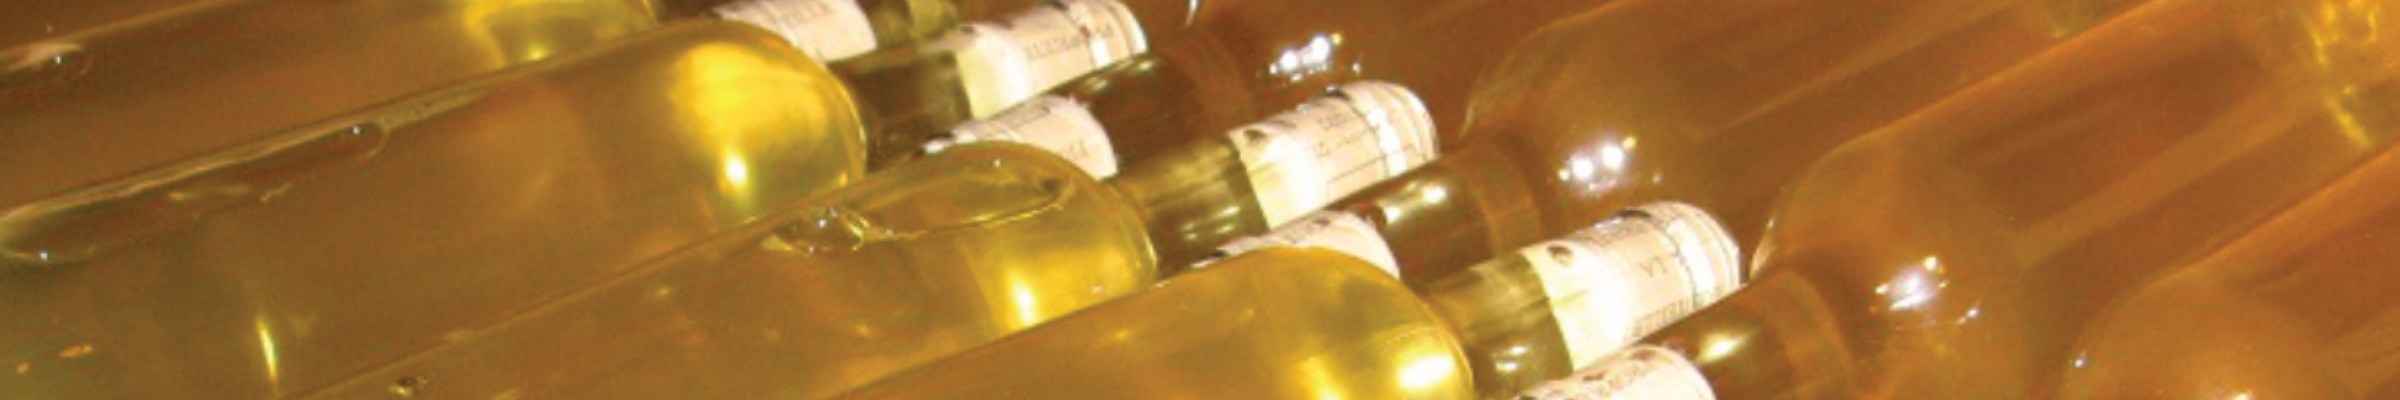 Hydromel artisanal au miel | Conroy Vins et Spiritueux